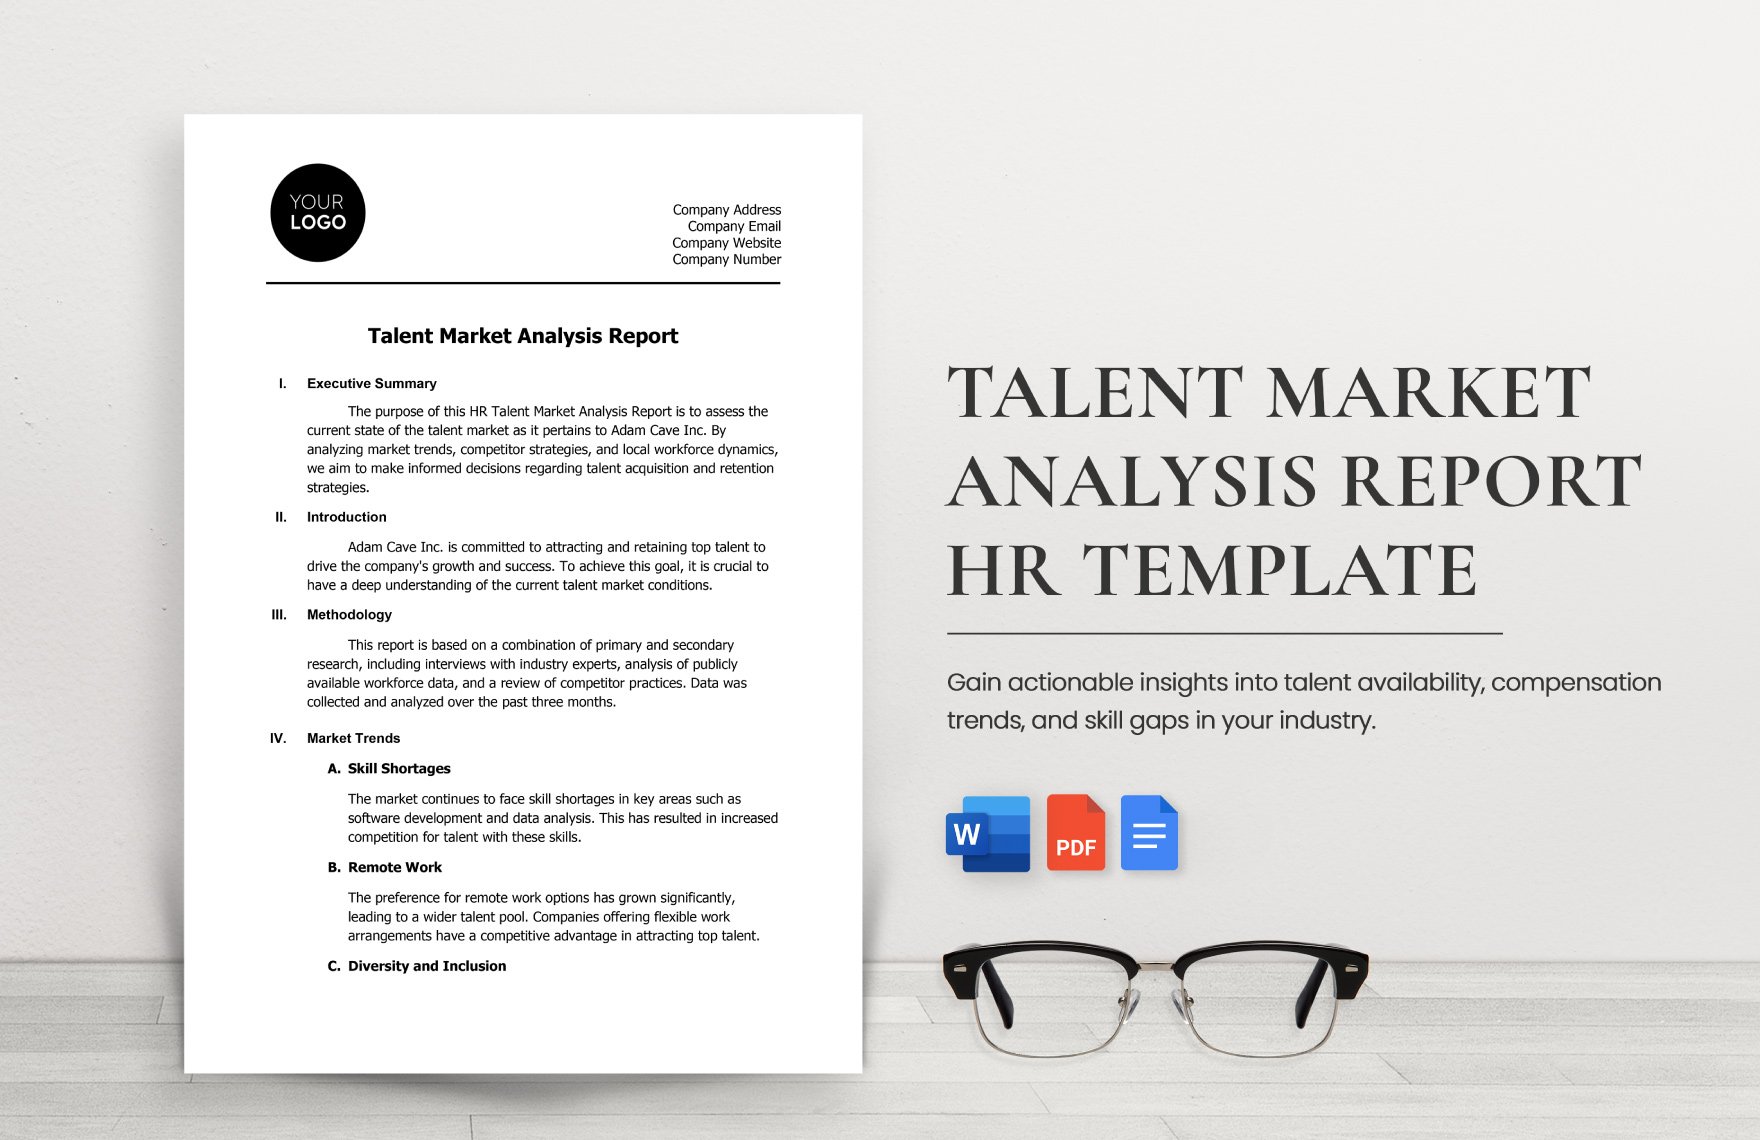 Talent Market Analysis Report HR Template